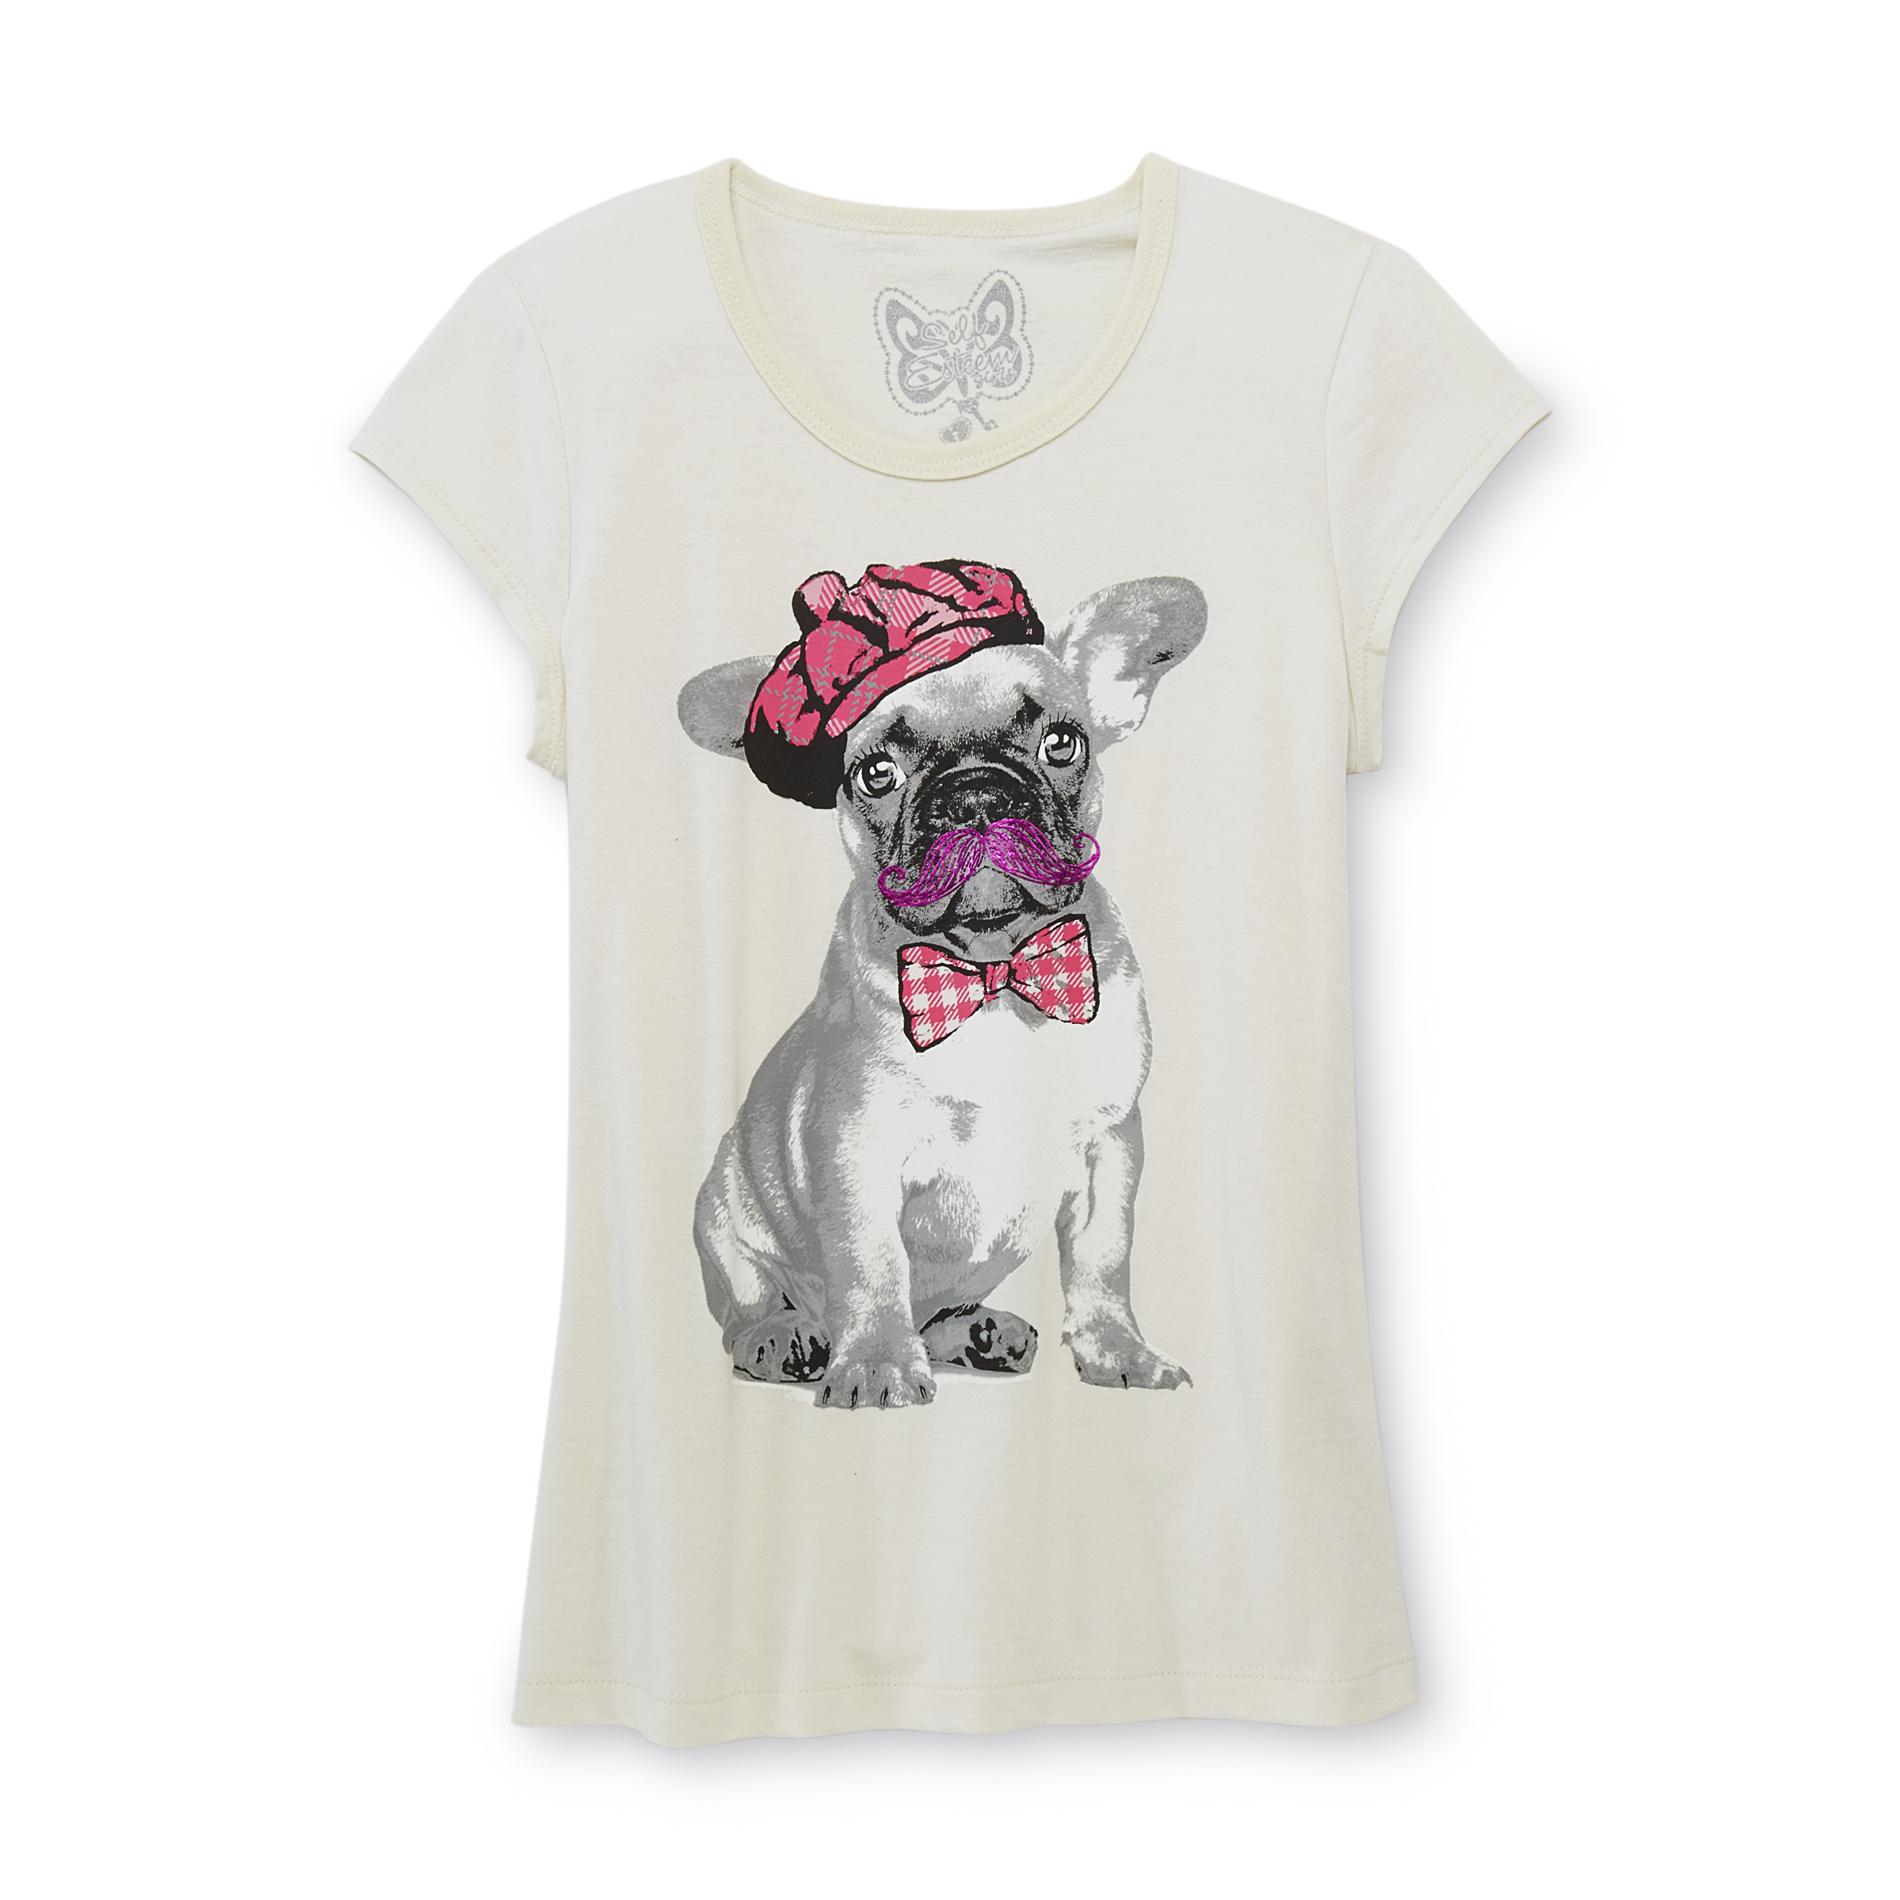 Self Esteem Girl's Graphic T-Shirt - Pug